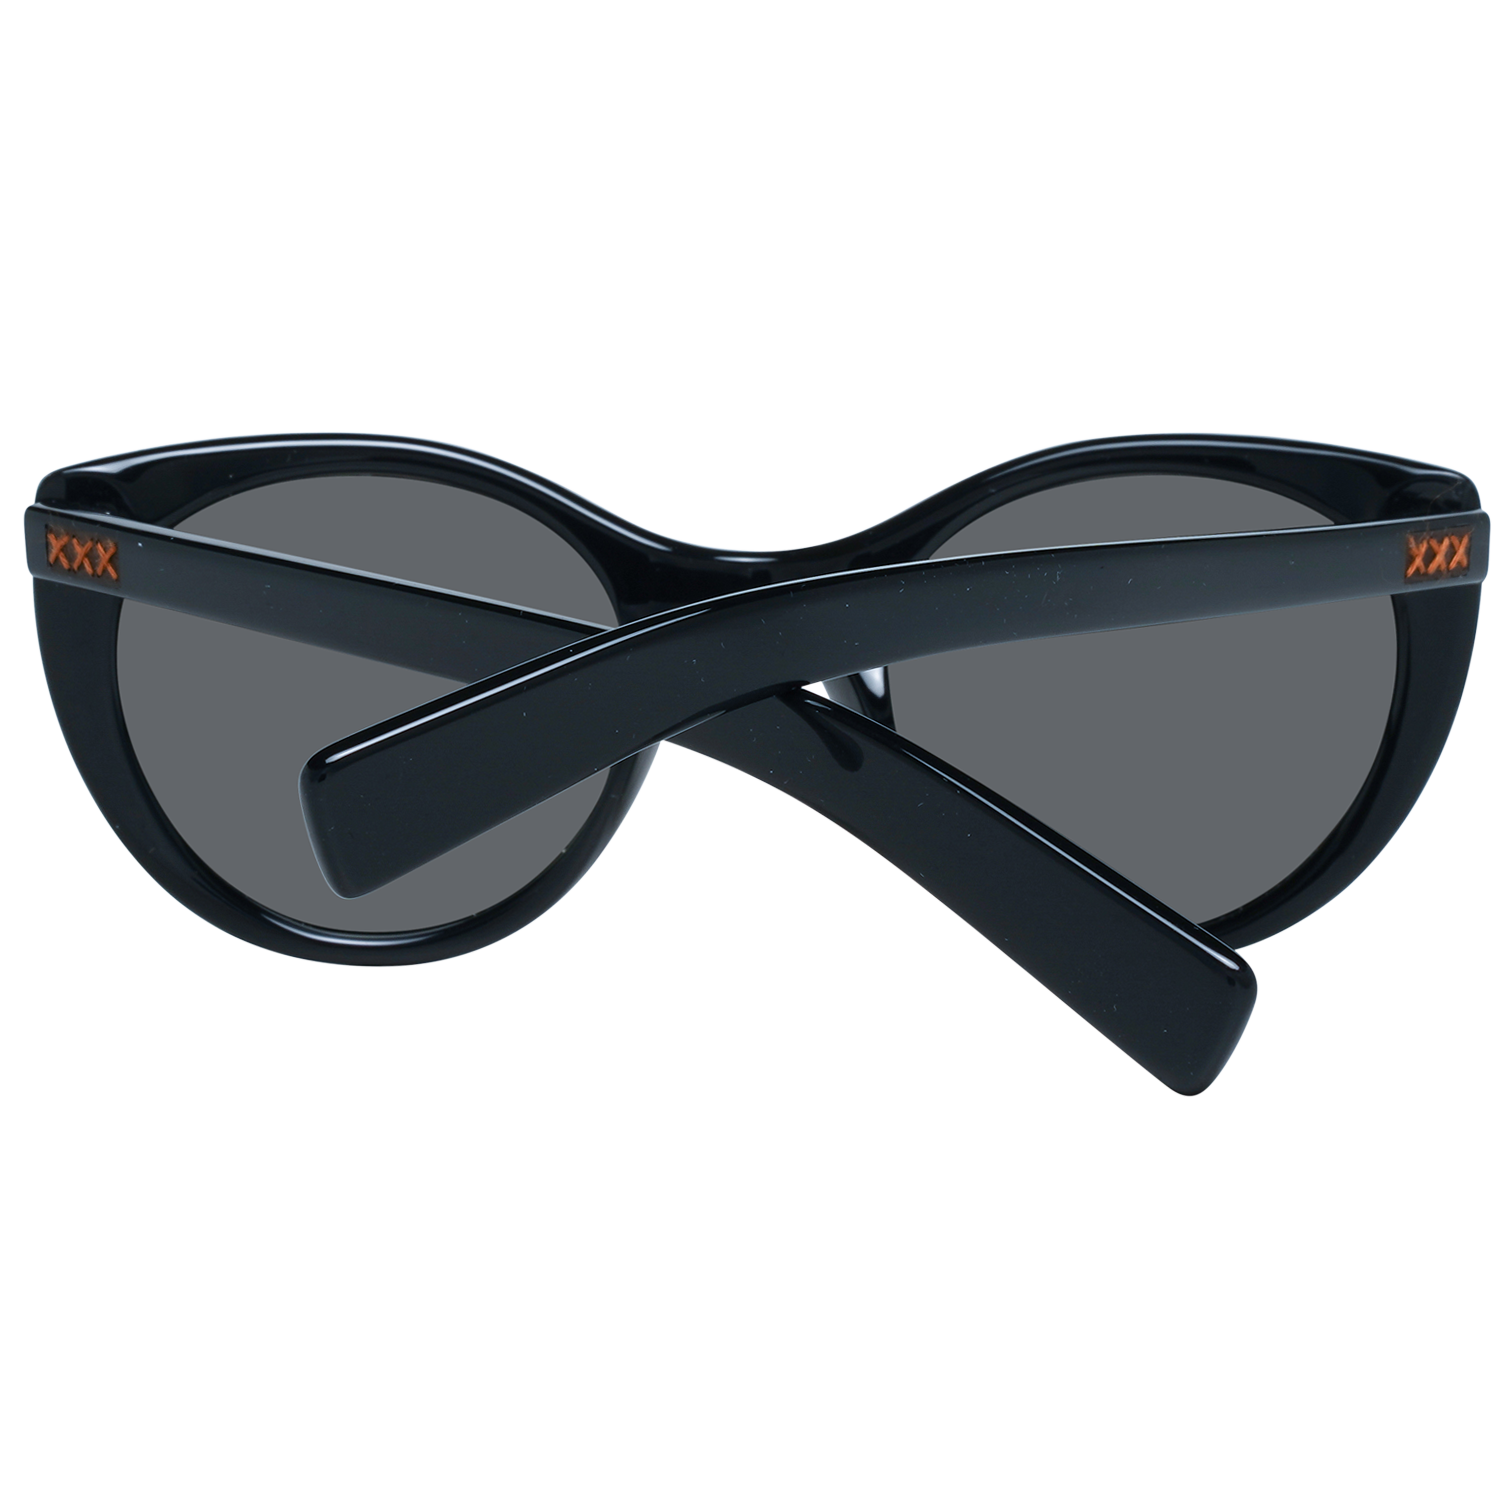 Zegna Couture Sunglasses Zegna Couture Sunglasses ZC0009 50 01A Eyeglasses Eyewear UK USA Australia 